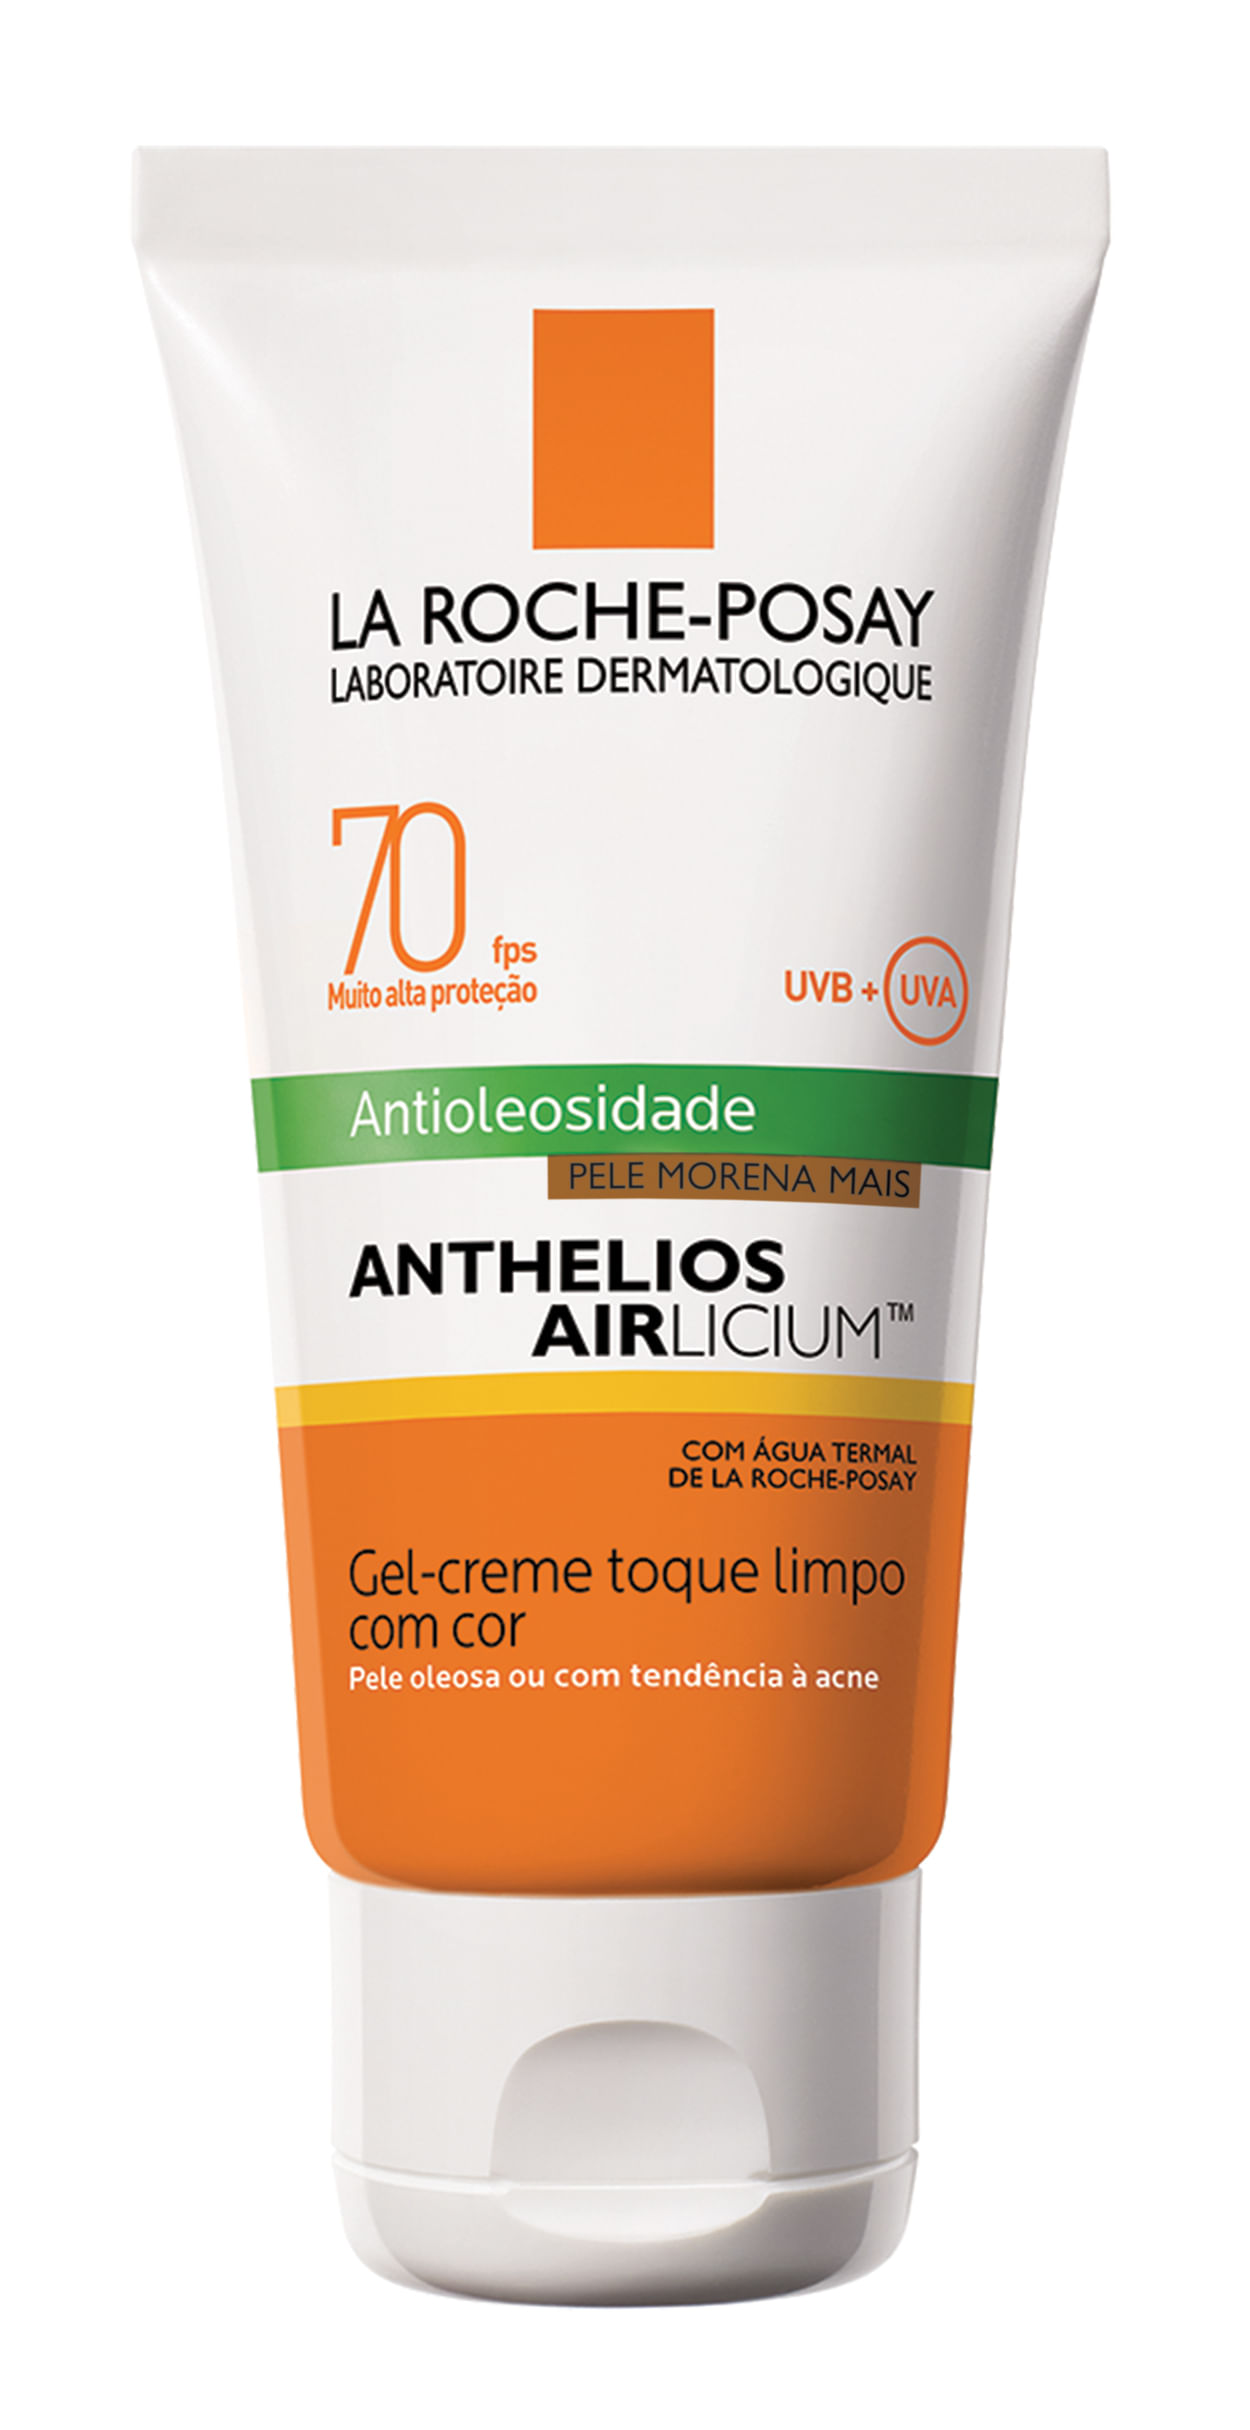 Protetor Solar Facial Gel Creme La Roche-Posay Anthelios Airlicium Fps70 Pele Morena Mais 50g